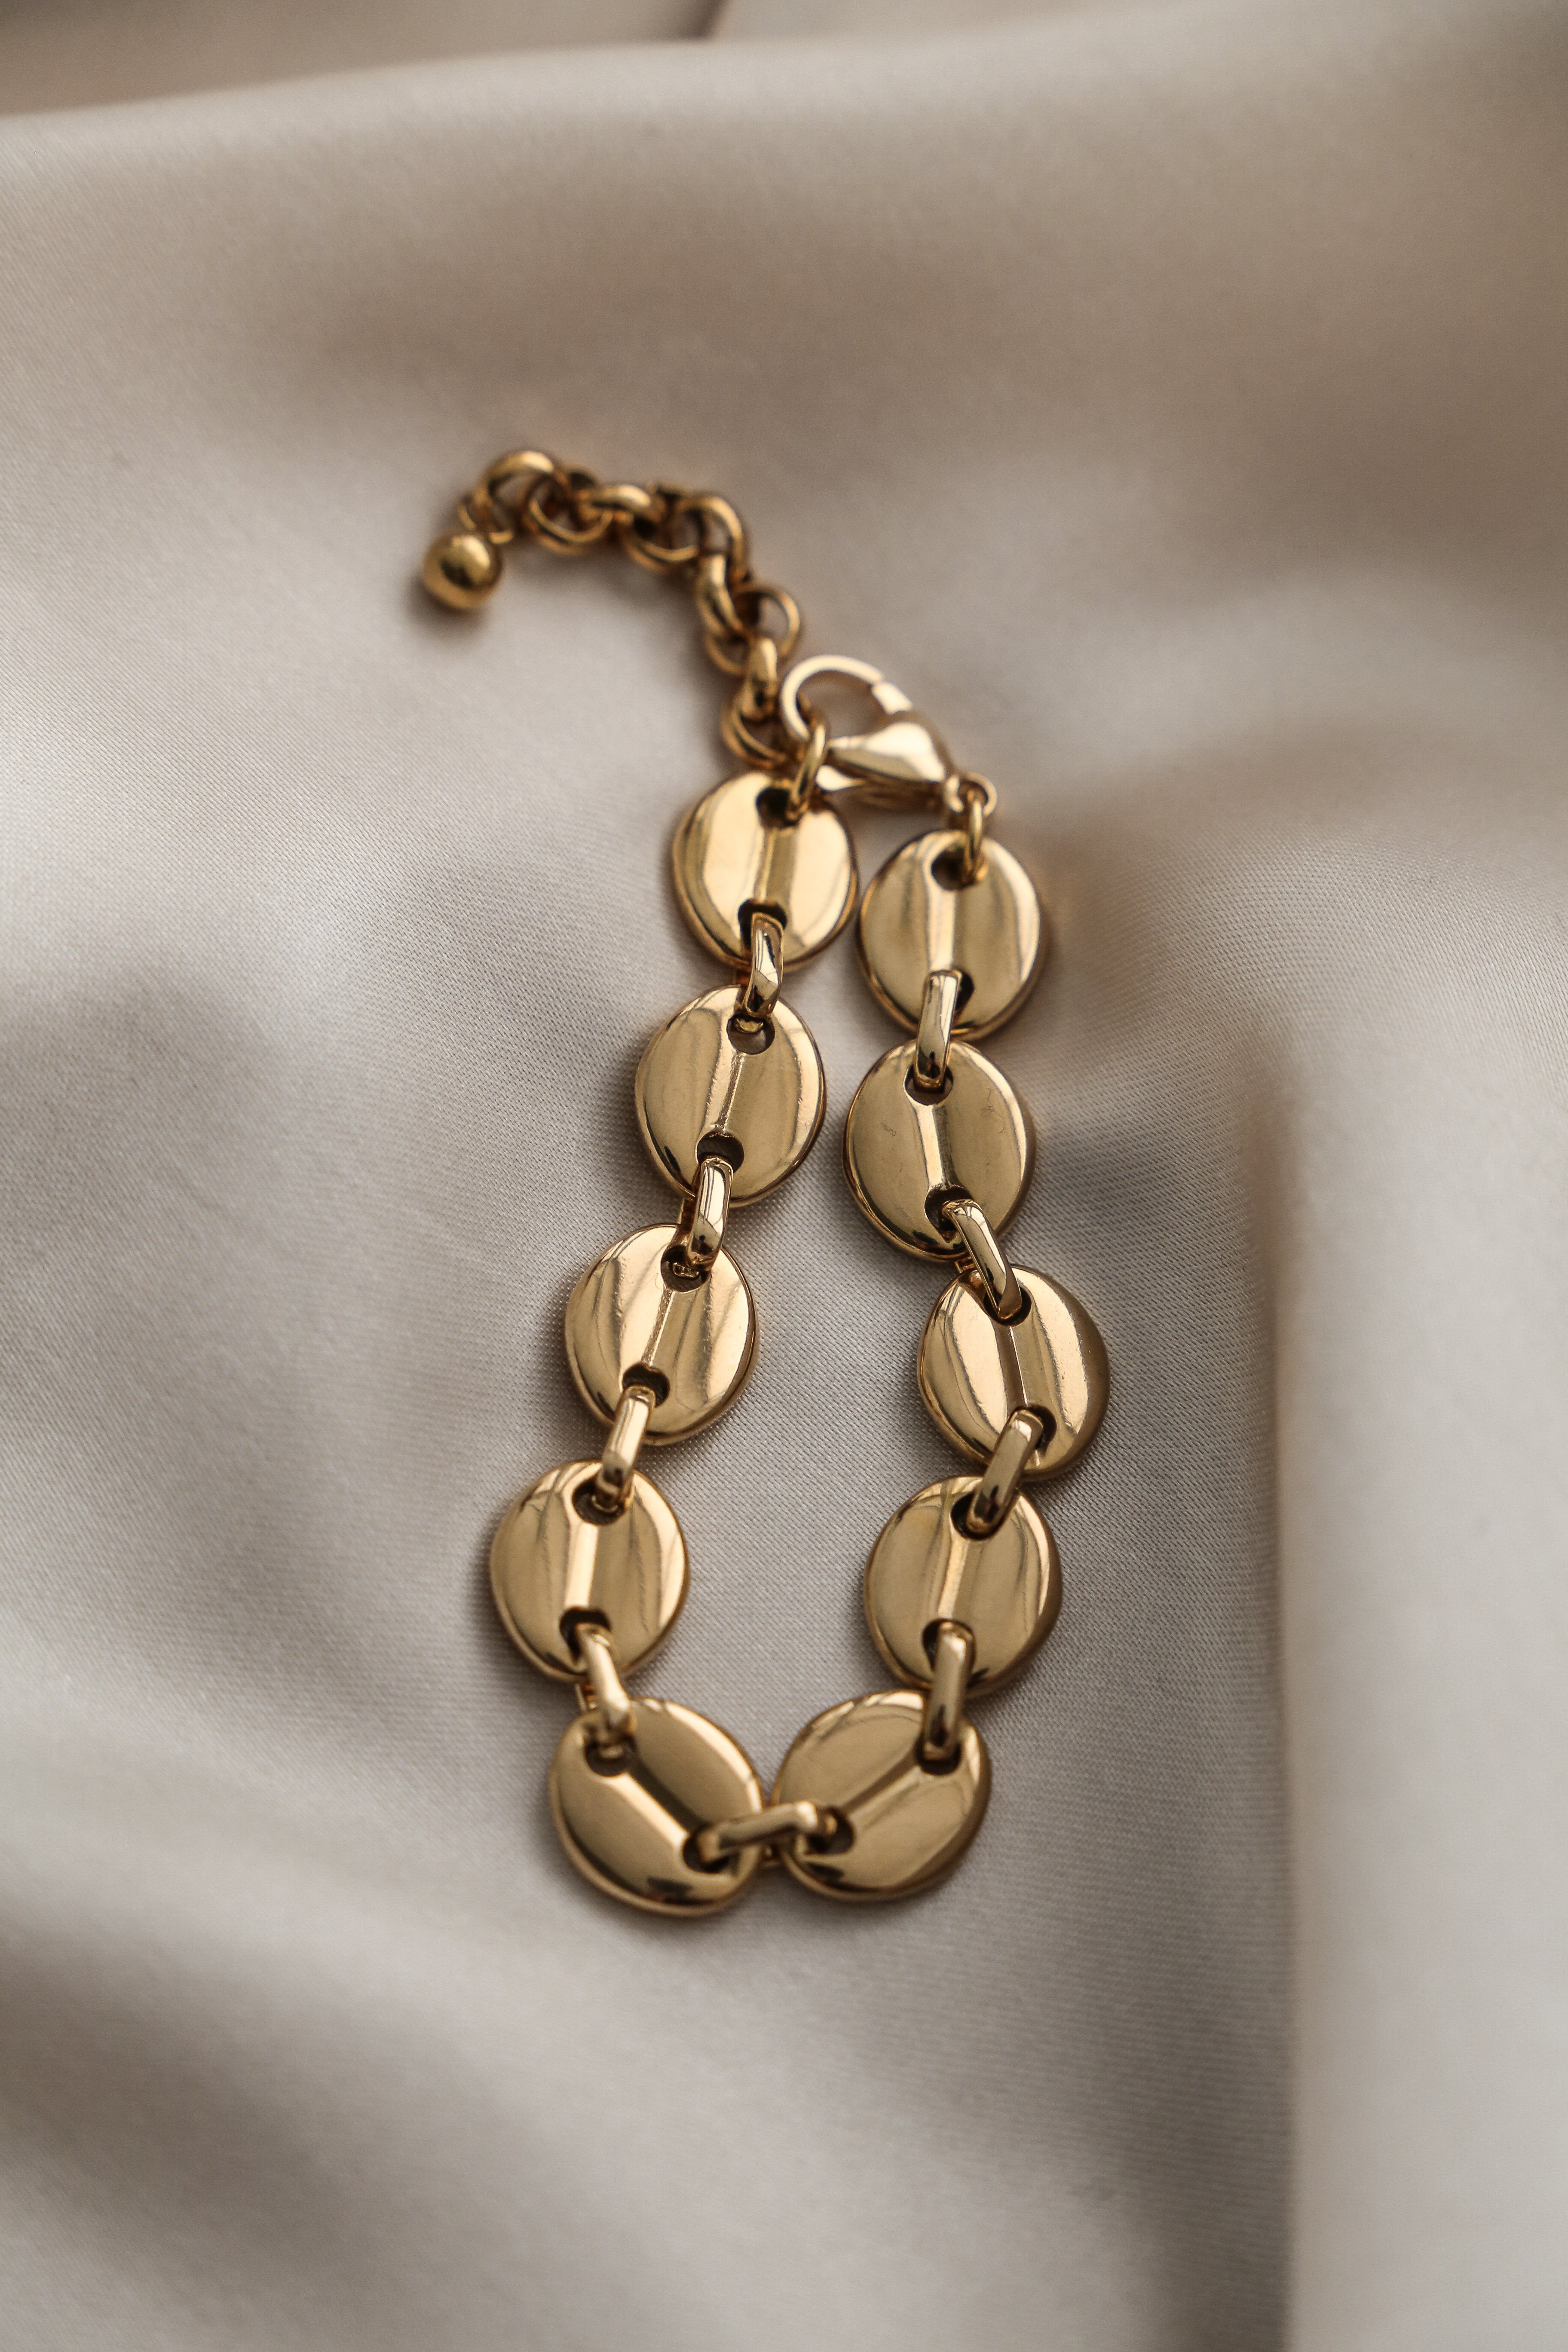 Celeste Bracelet - Boutique Minimaliste has waterproof, durable, elegant and vintage inspired jewelry